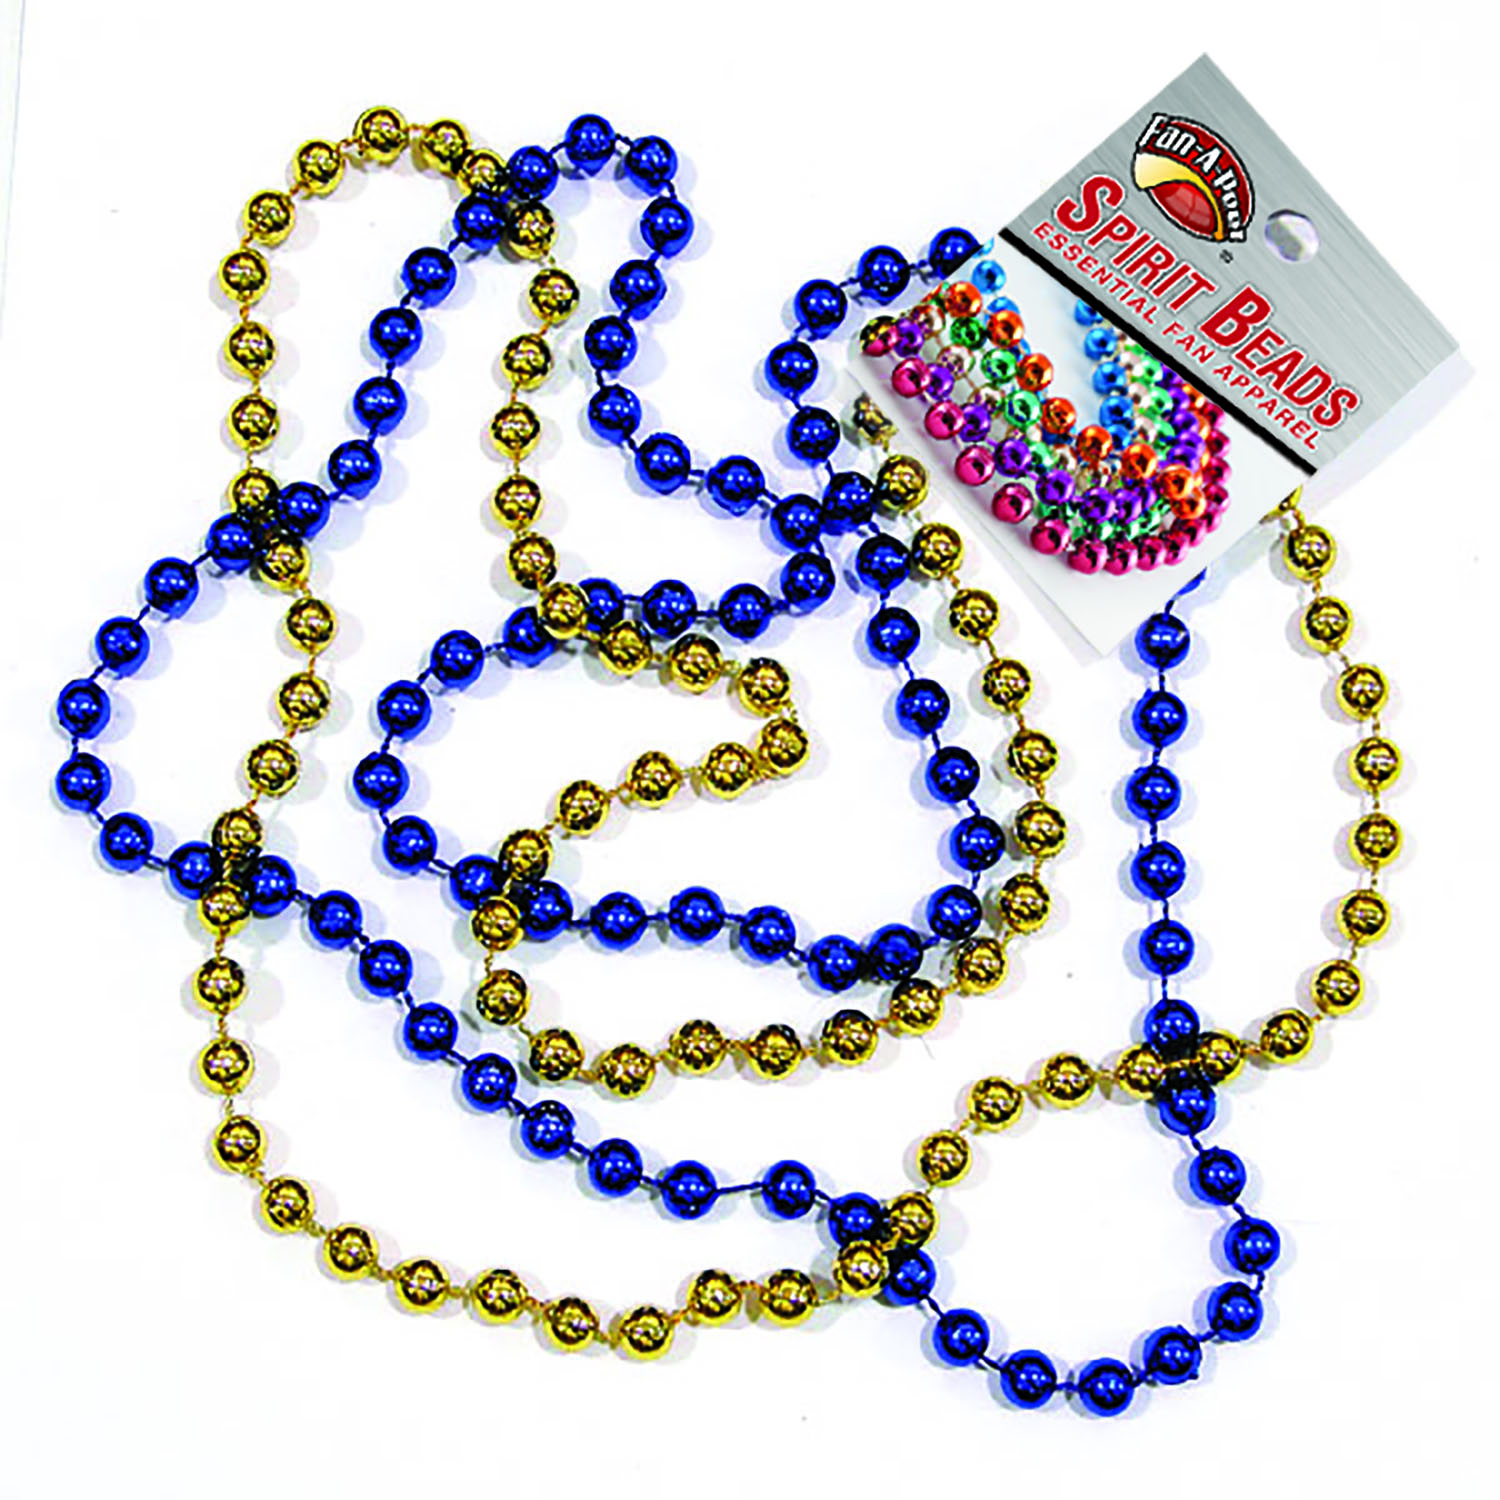 Mardi Gras necklace United States Navy beads Mardi Gras Navy bead necklace